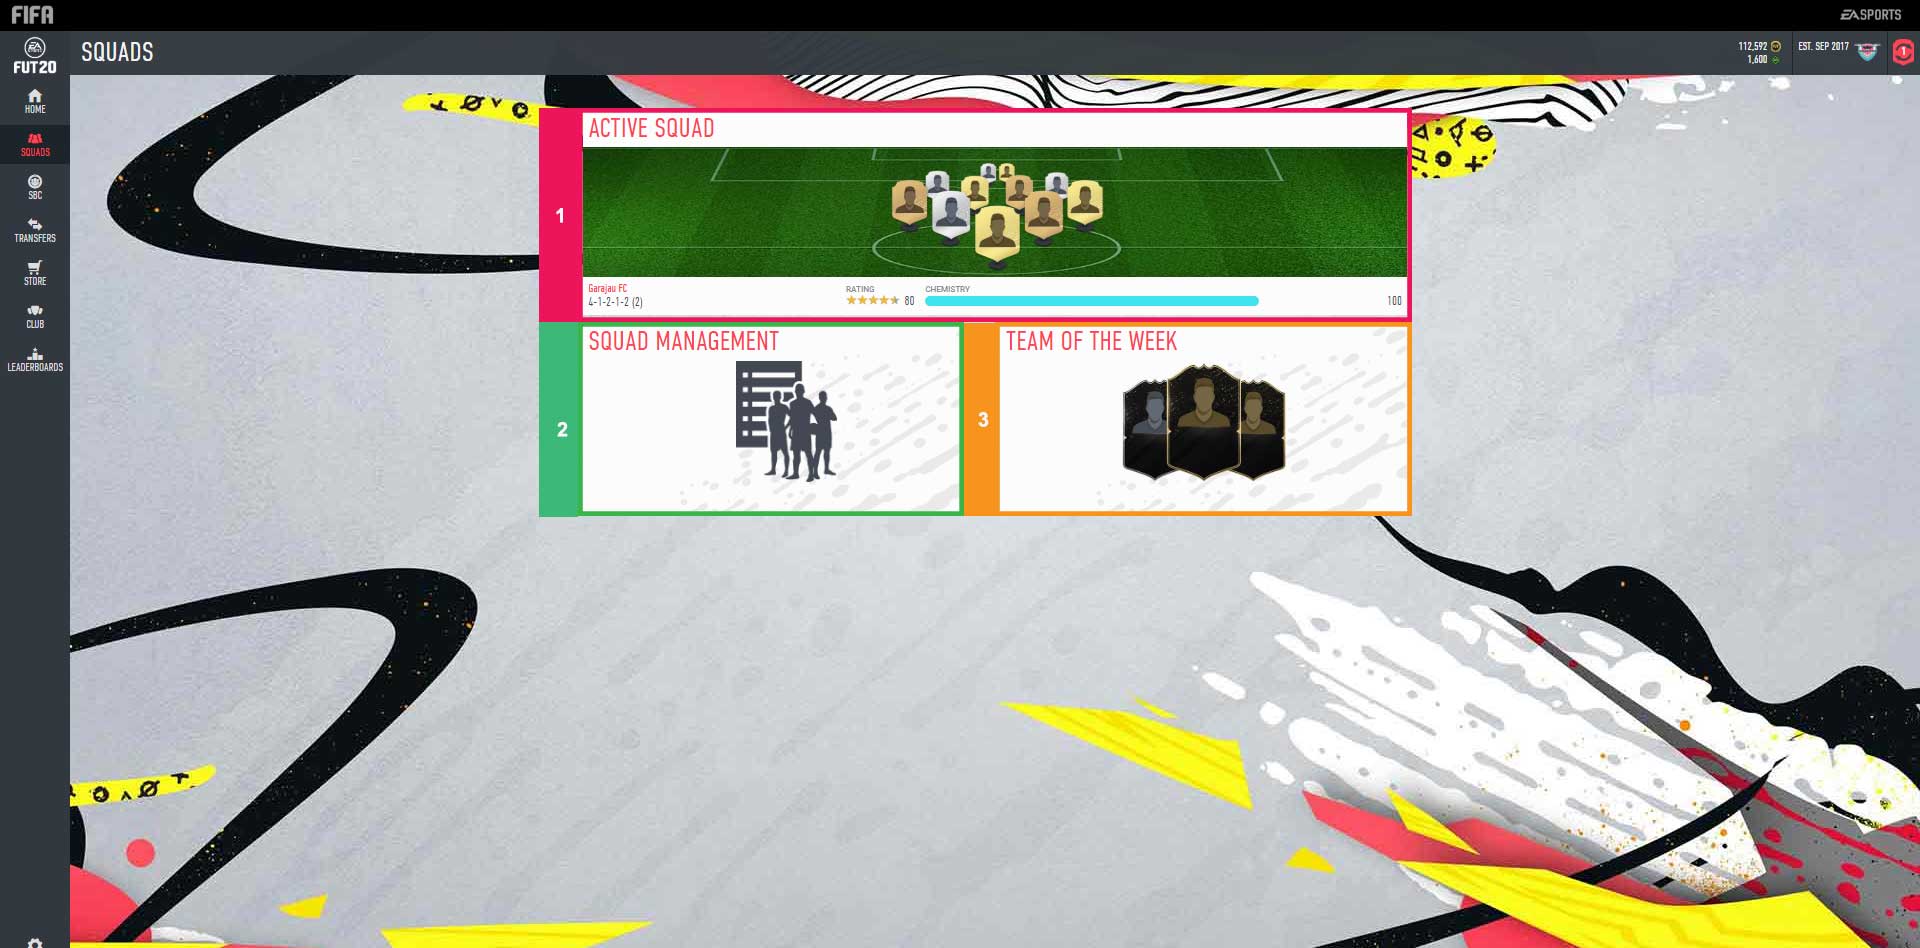 FIFA 20 Web and Companion Apps Tutorial